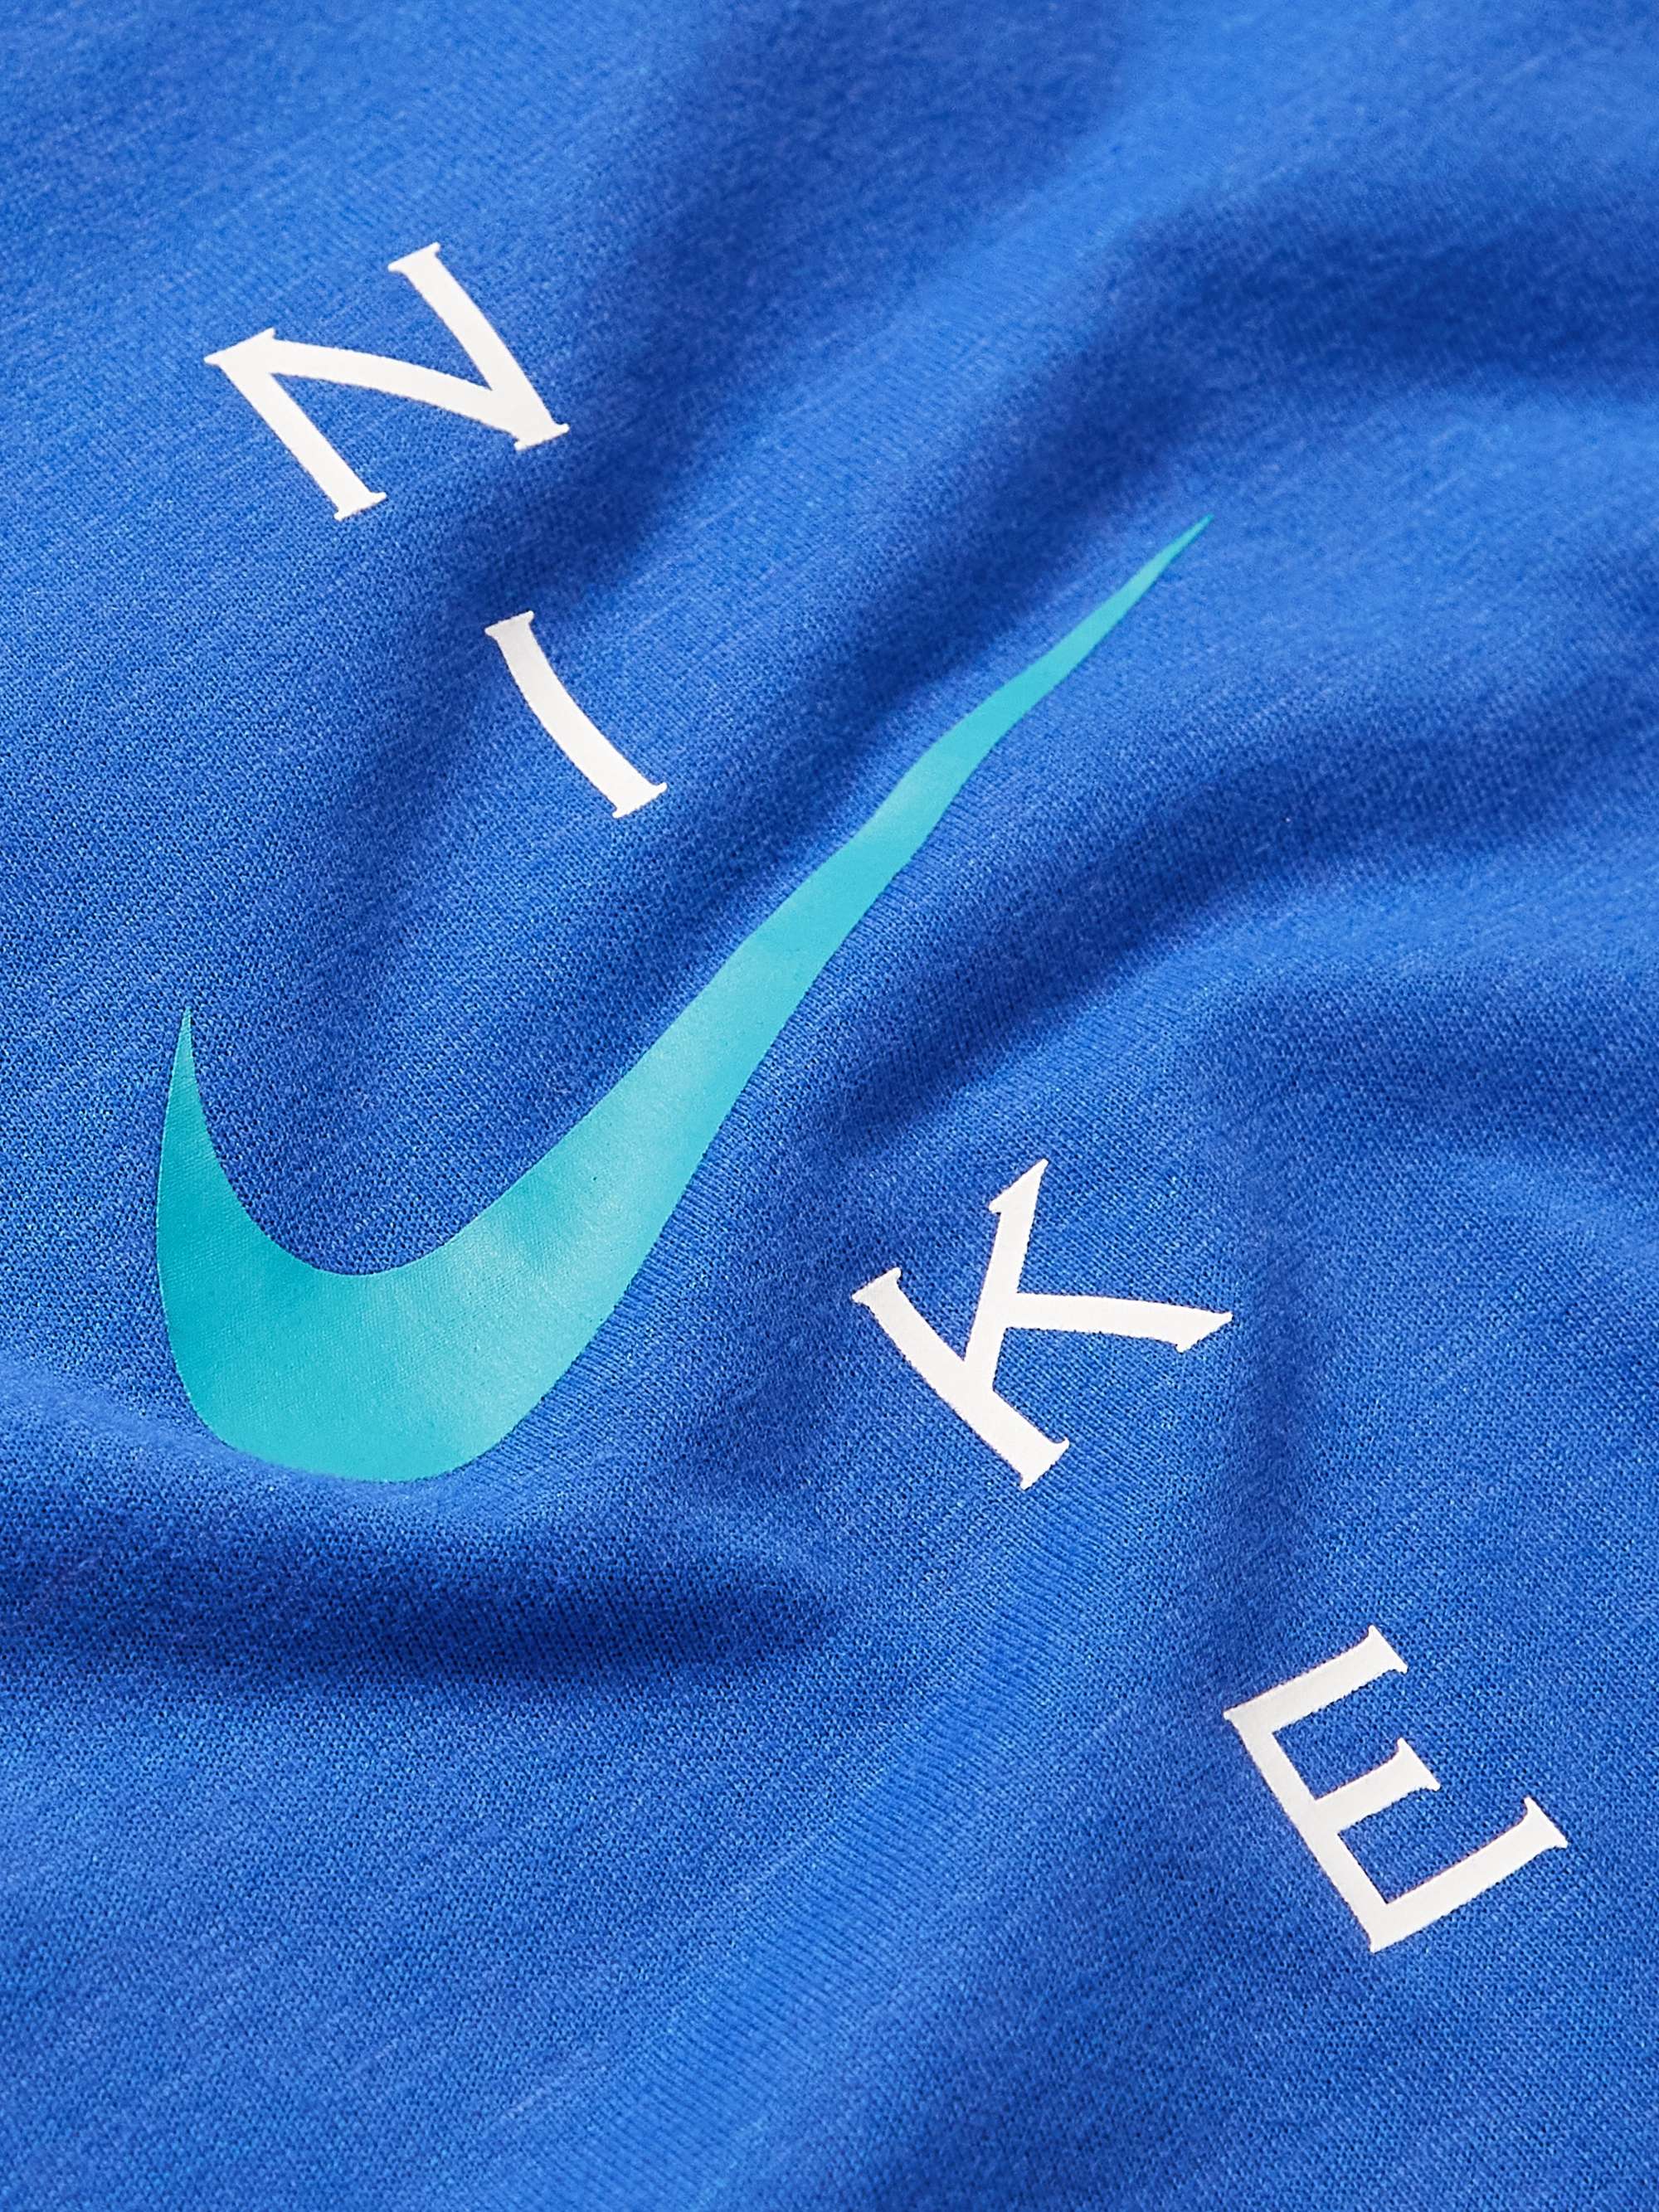 NIKE TRAINING Logo-Print Dri-FIT Cotton-Blend Jersey T-Shirt